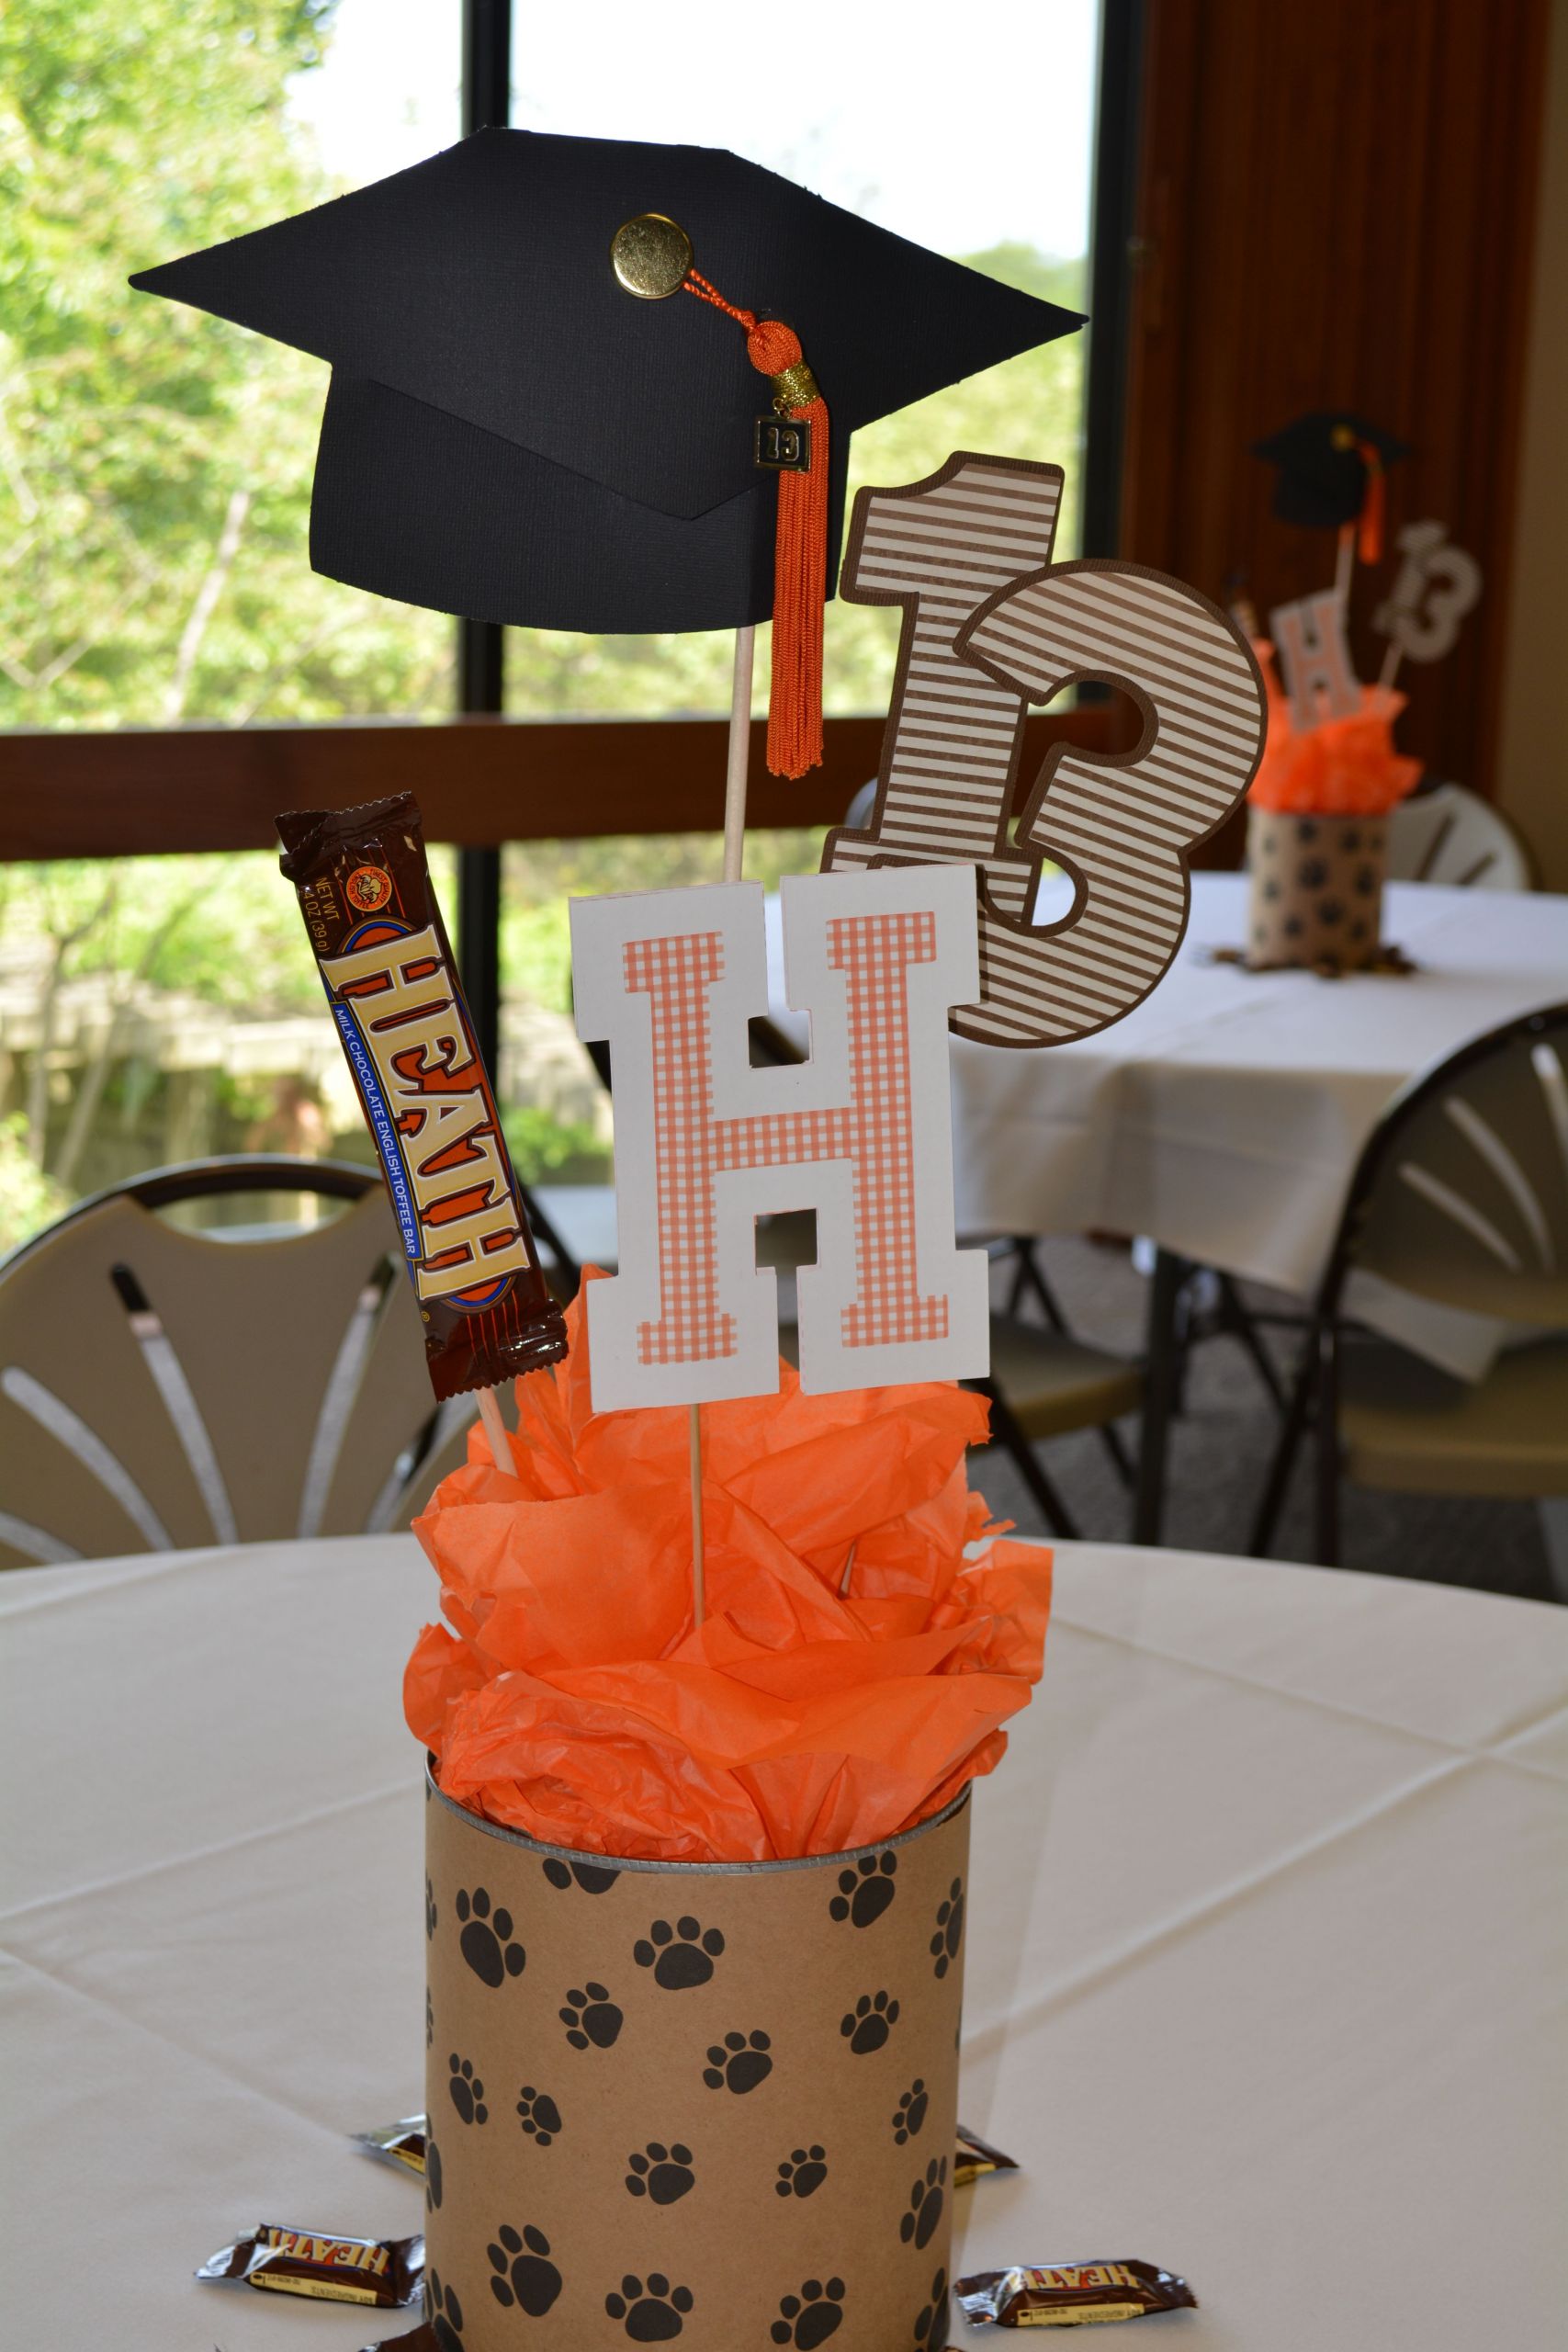 Table Decoration Ideas For High School Graduation Party
 Graduation table centerpieces with Cricut cuts Jolee